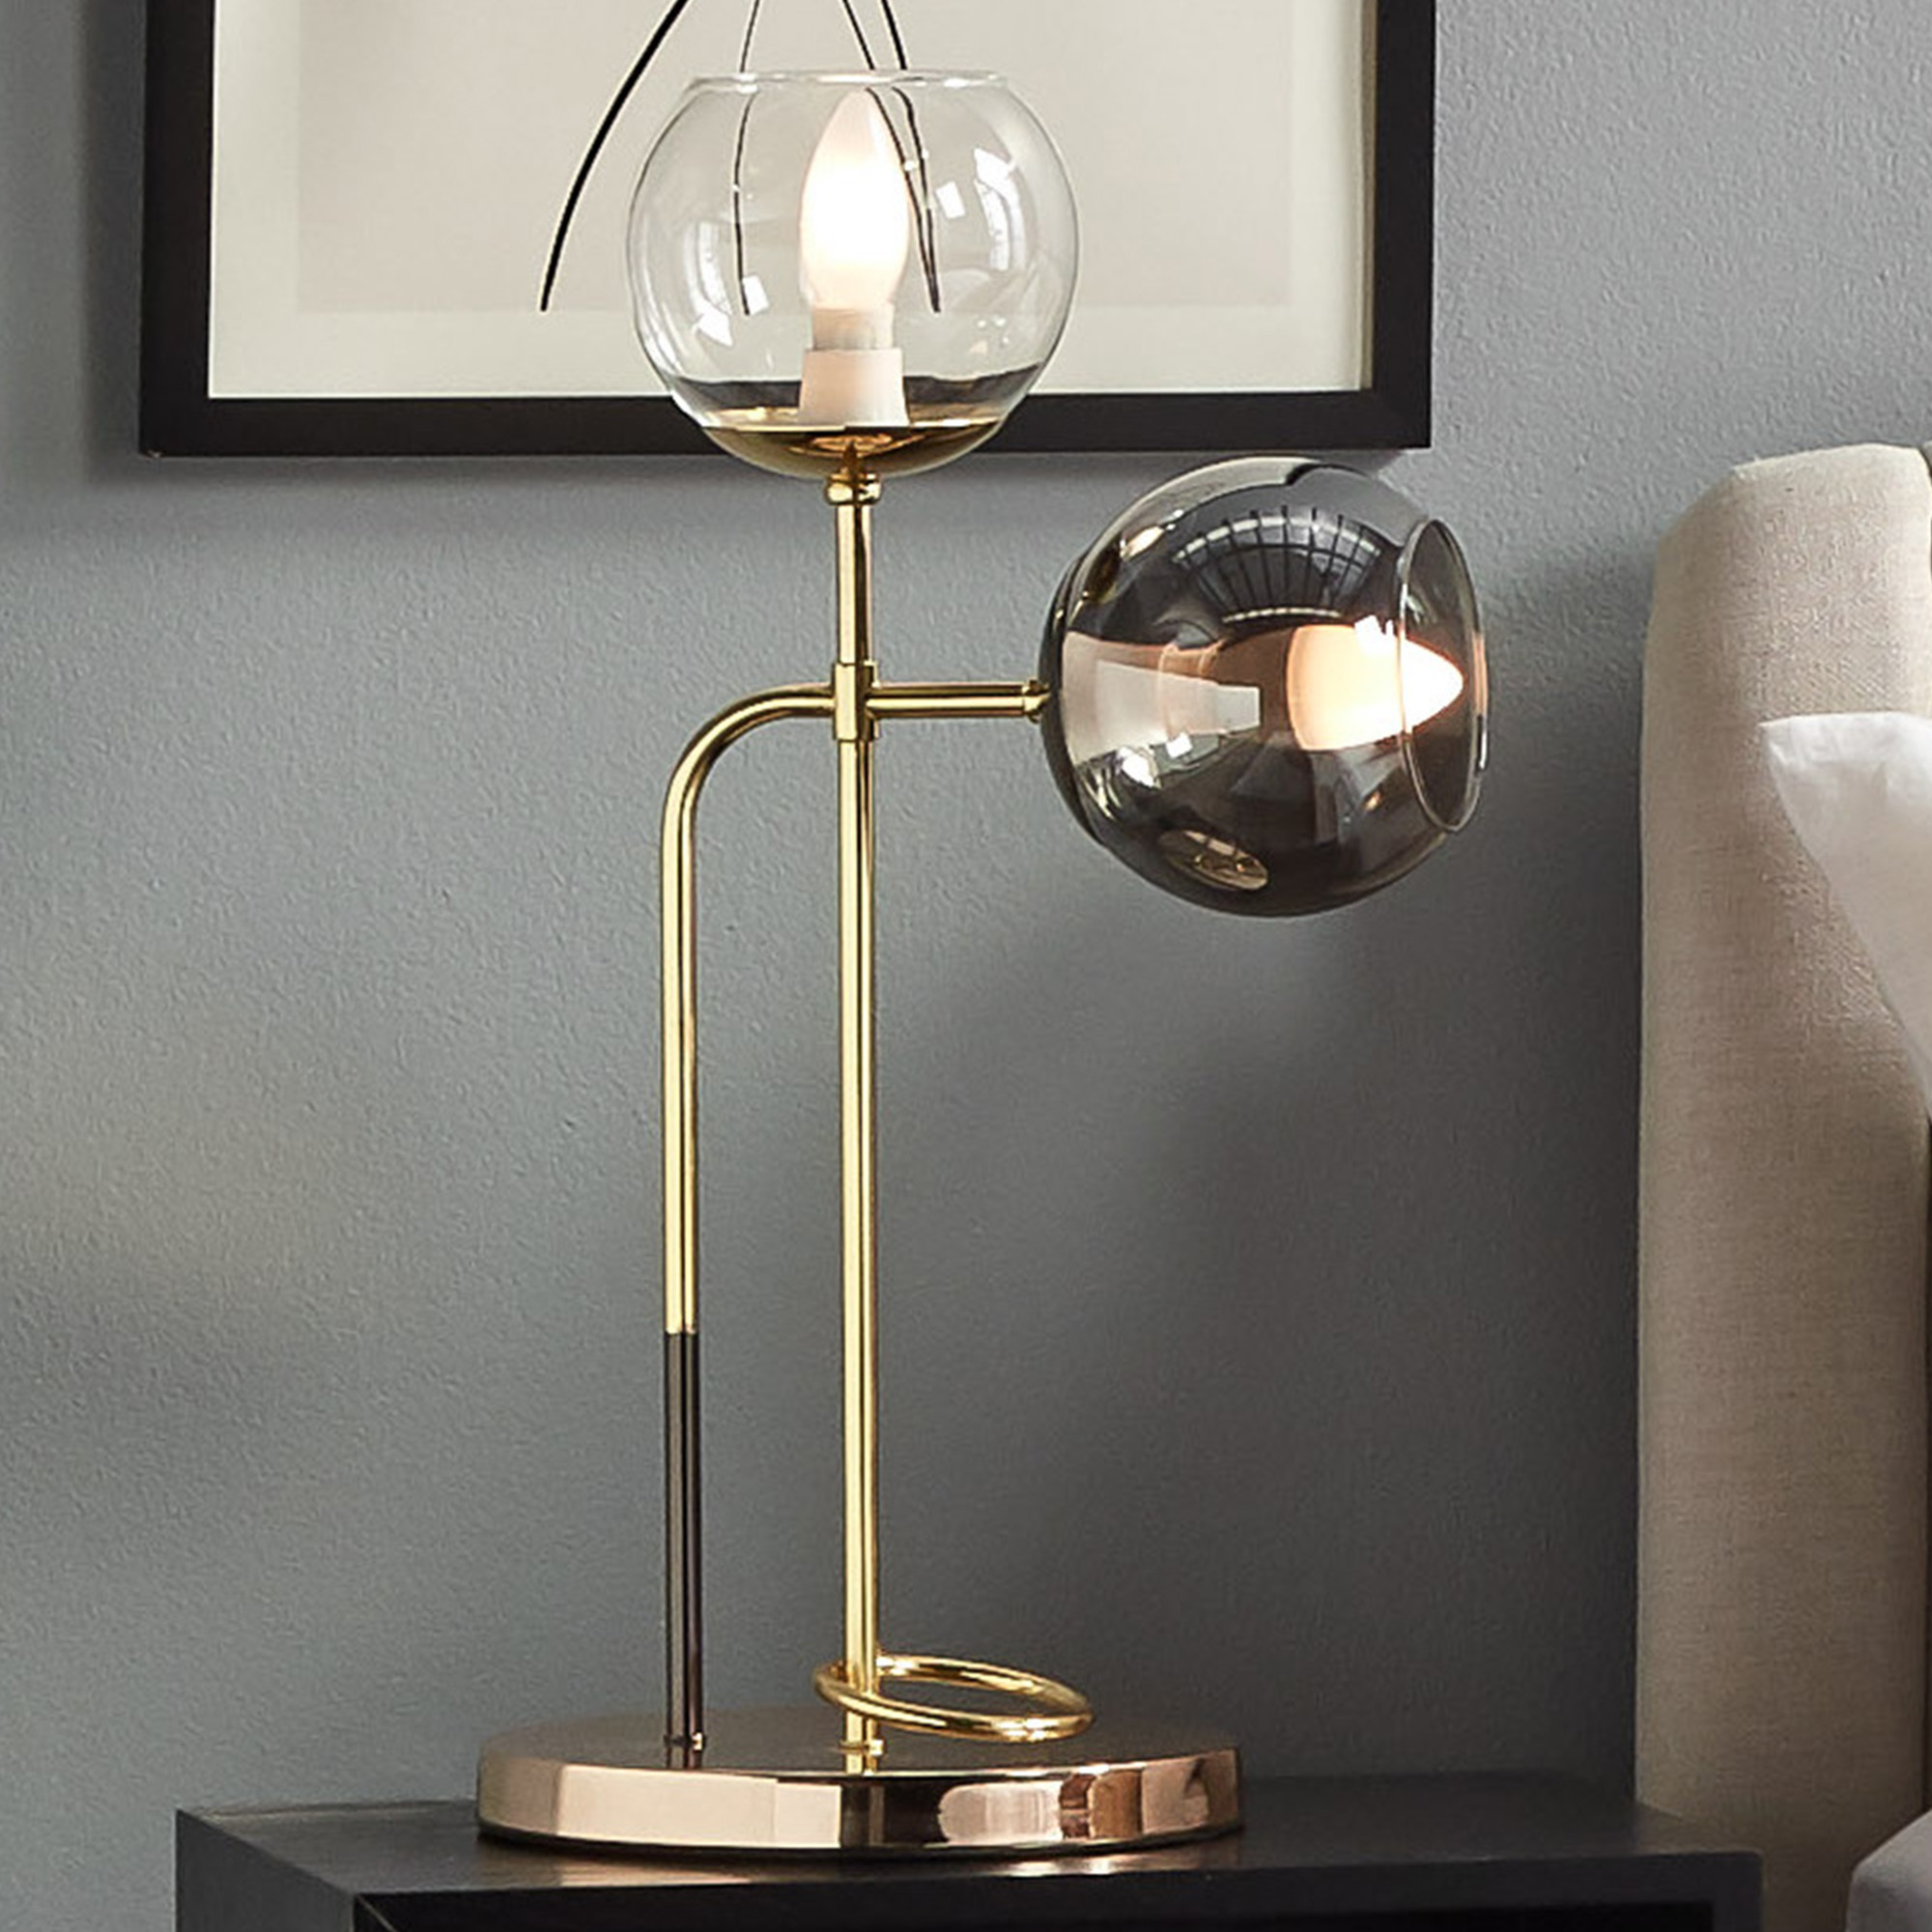 Glass Globe Table Lamp, Large White Glass Globe Table Lamp